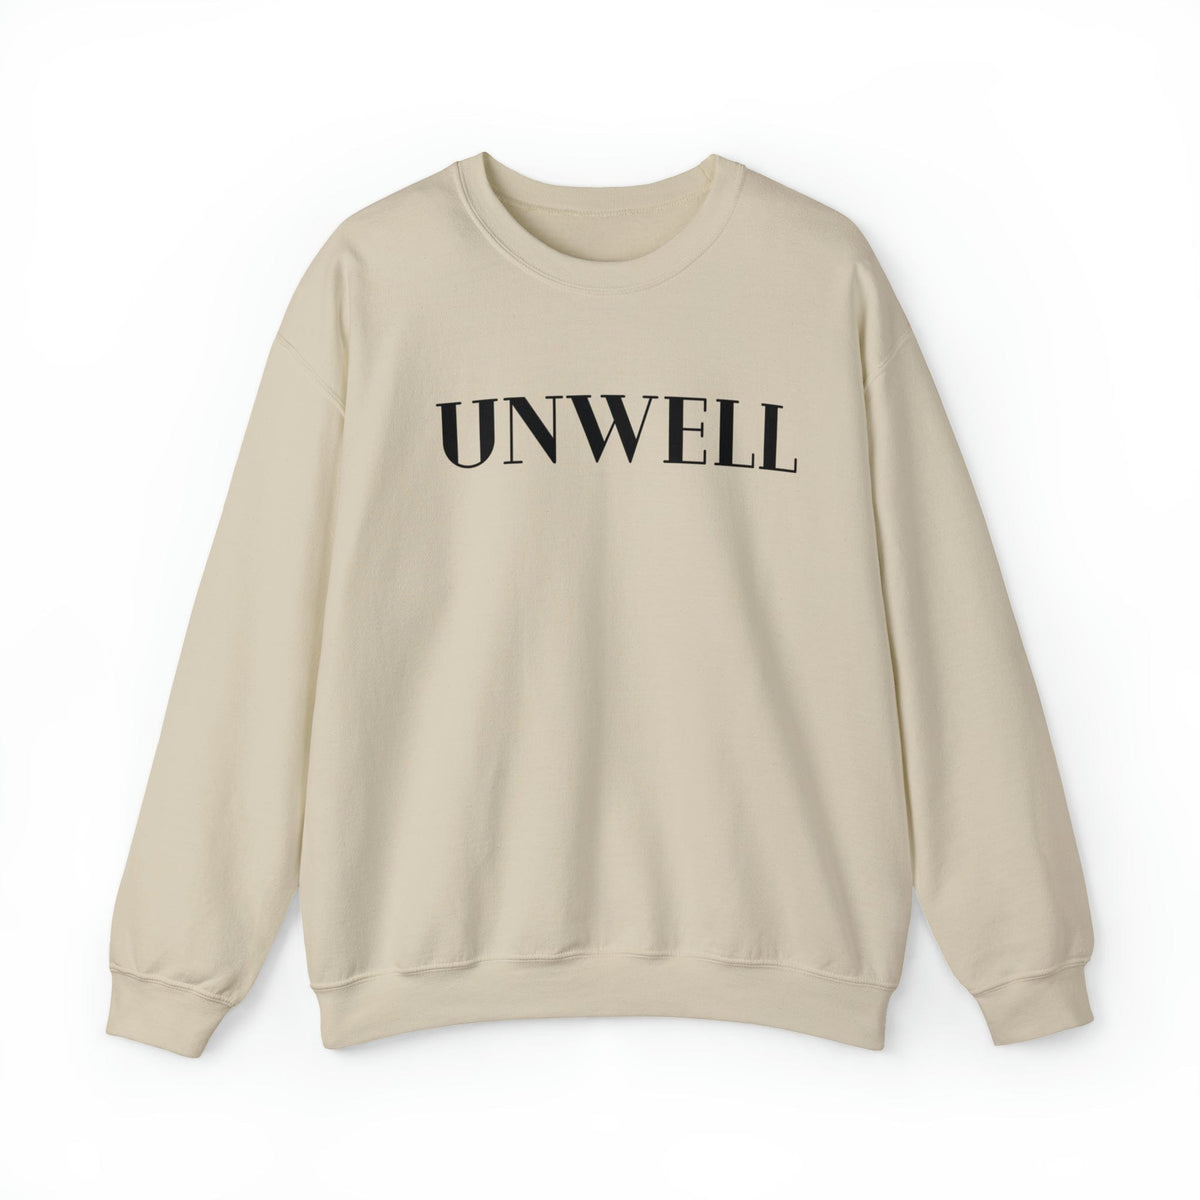 I am Unwell Sweatshirt Funny Crewneck Sweater Sweatshirt TheFringeCultureCollective